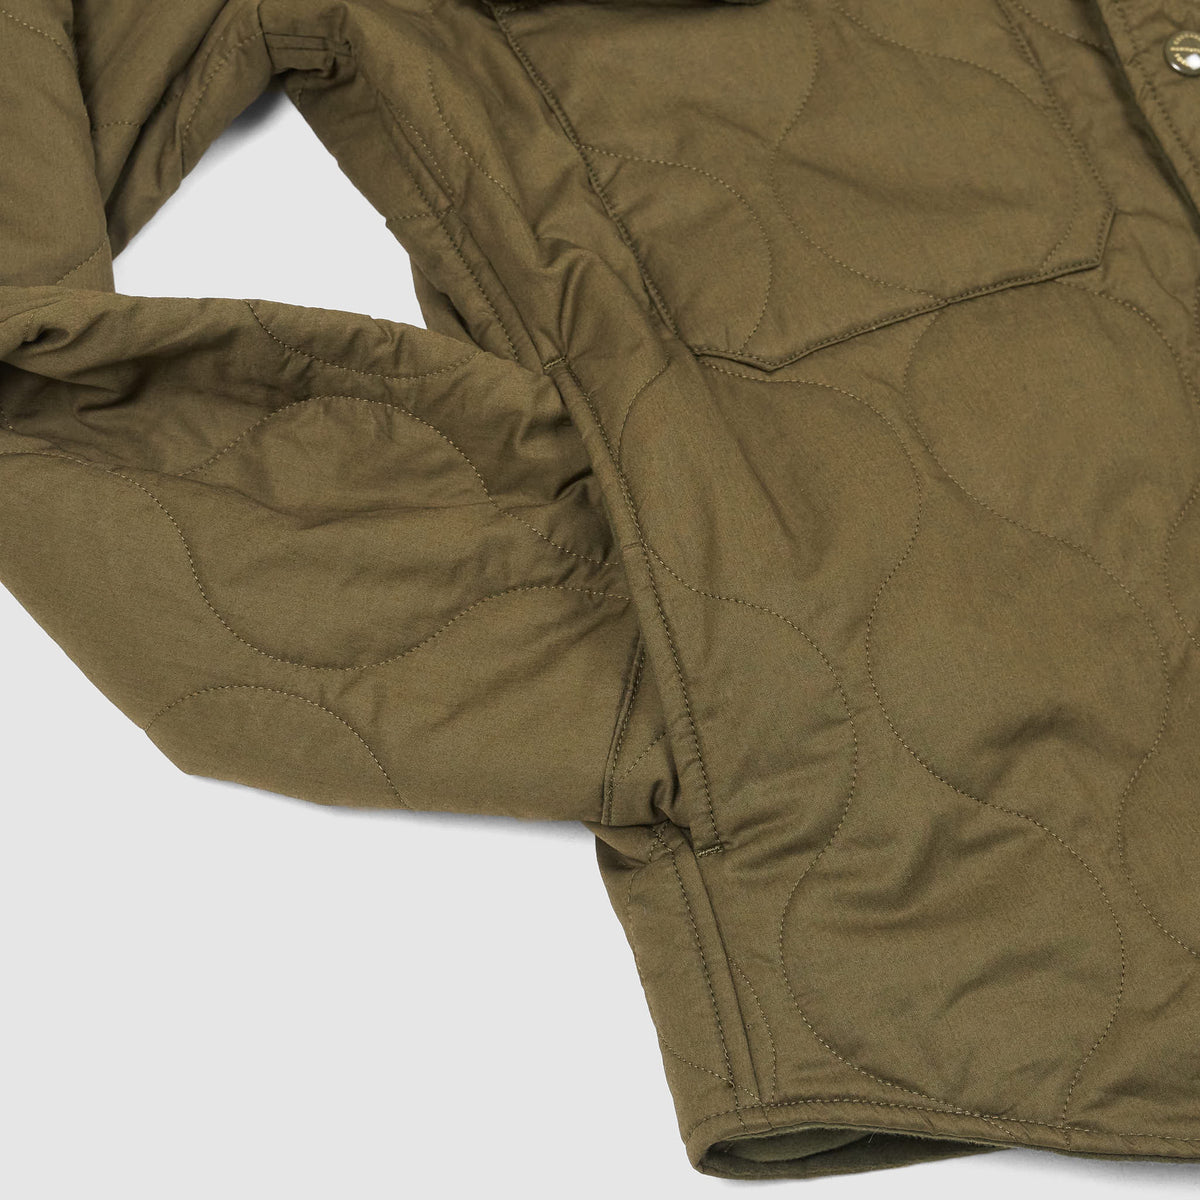 Manifattura Ceccarelli Quilted Overshirt jacket